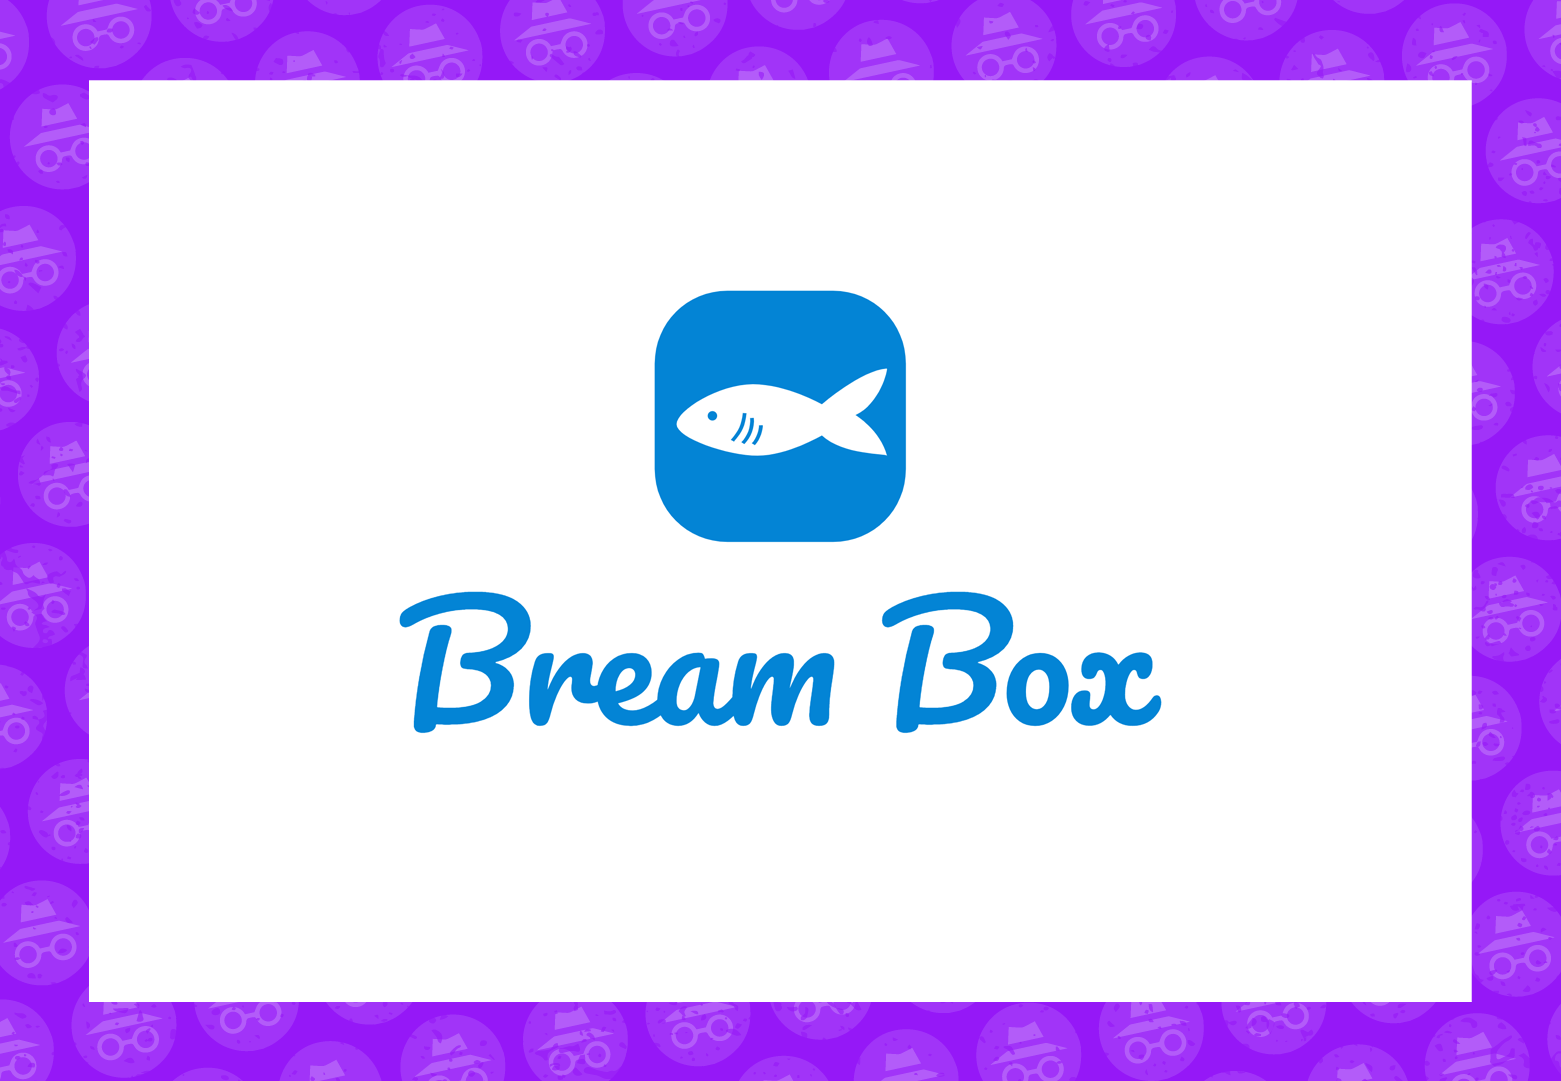 Bream Box Logo on Background